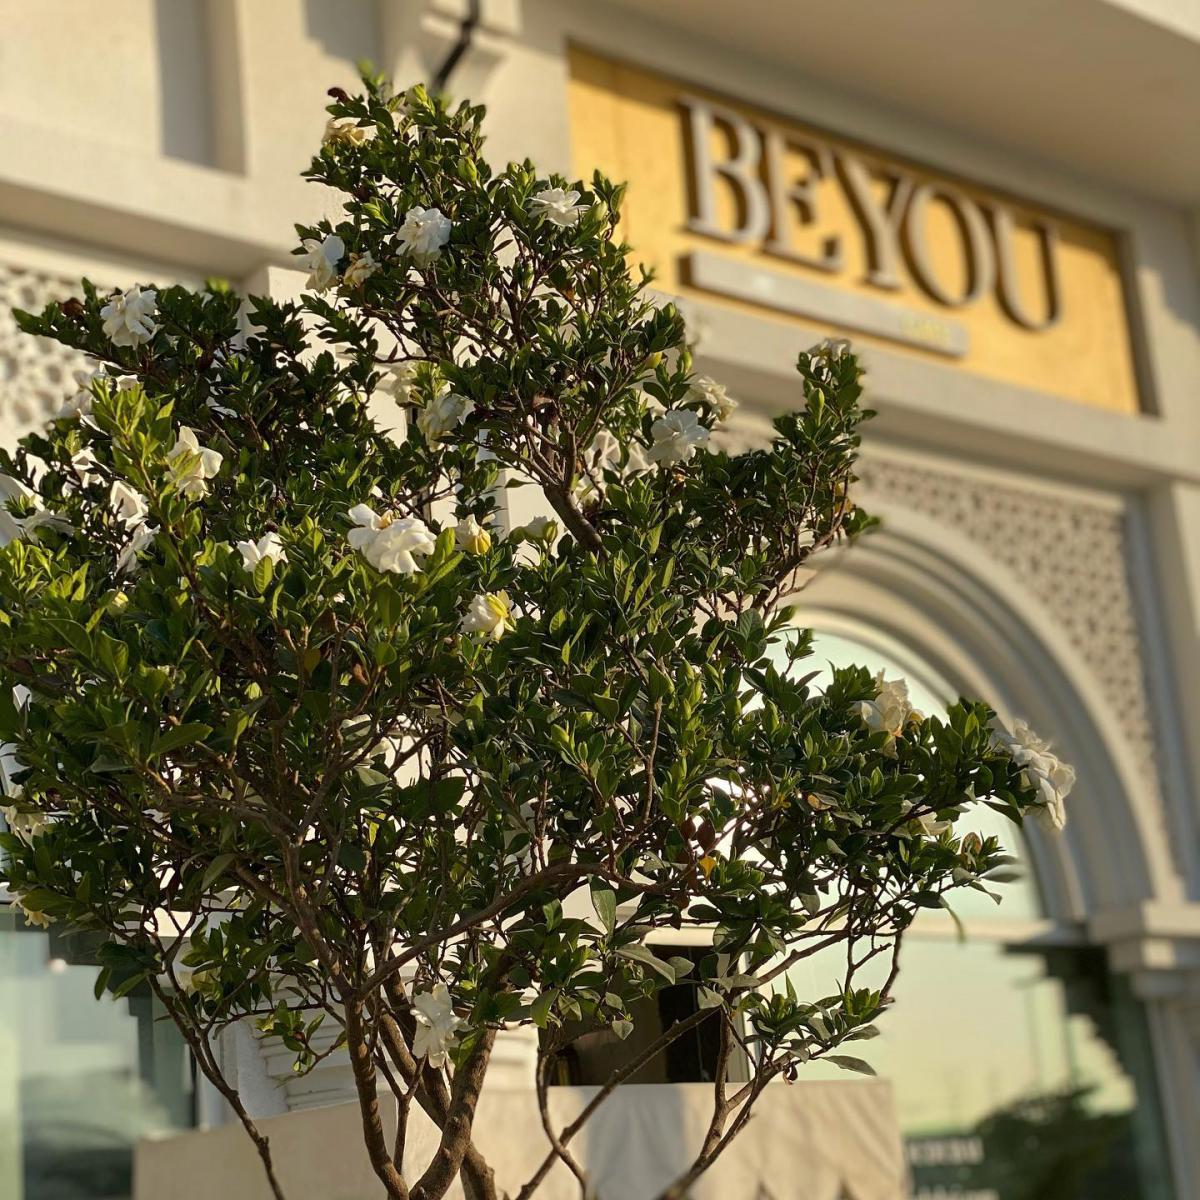 Beyou Boutique at dar wasl